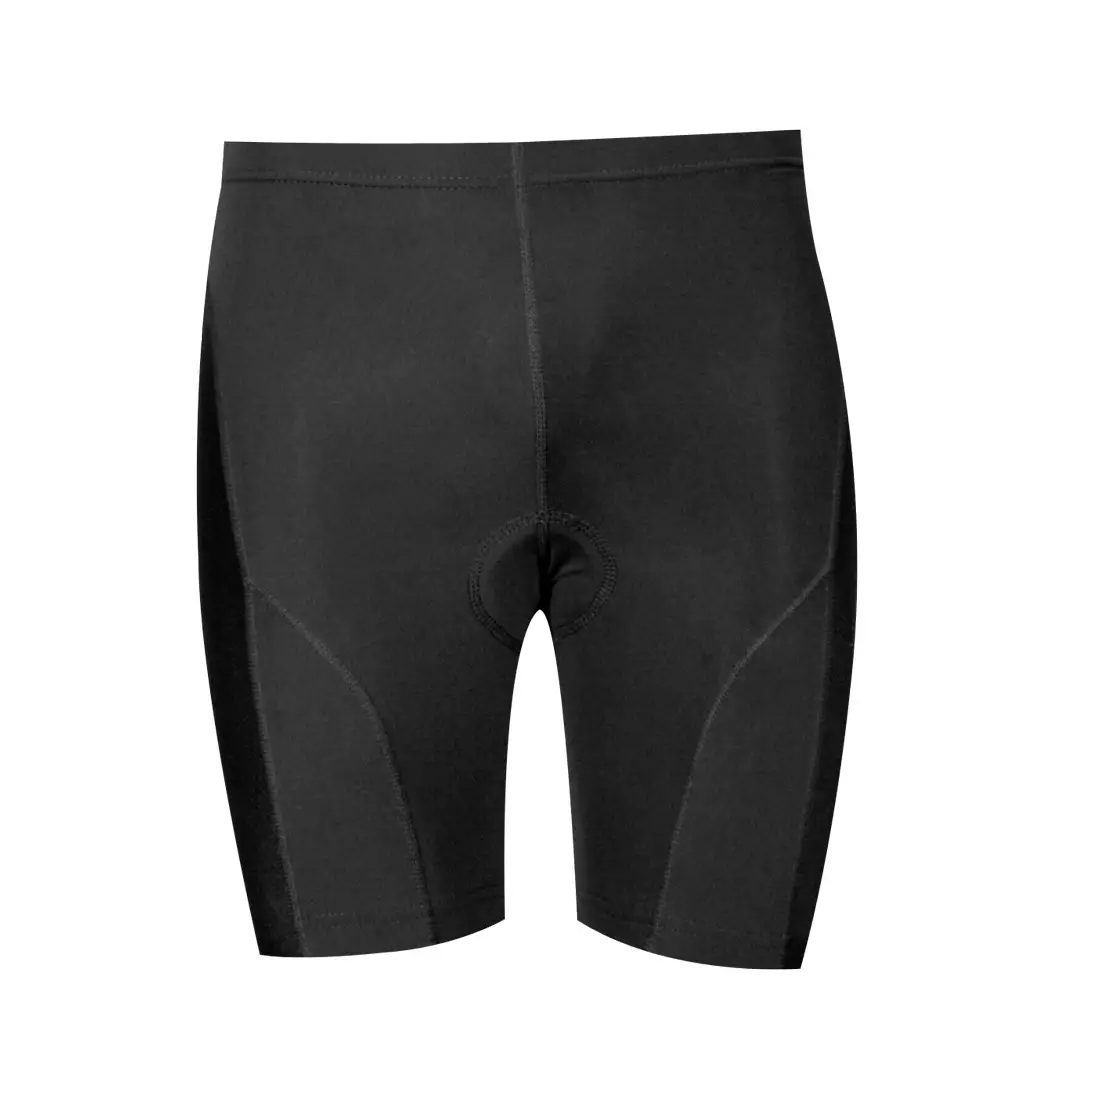 NEWLINE BIKE SHORTS - women's cycling shorts, Comfort Zone insert 20755-060